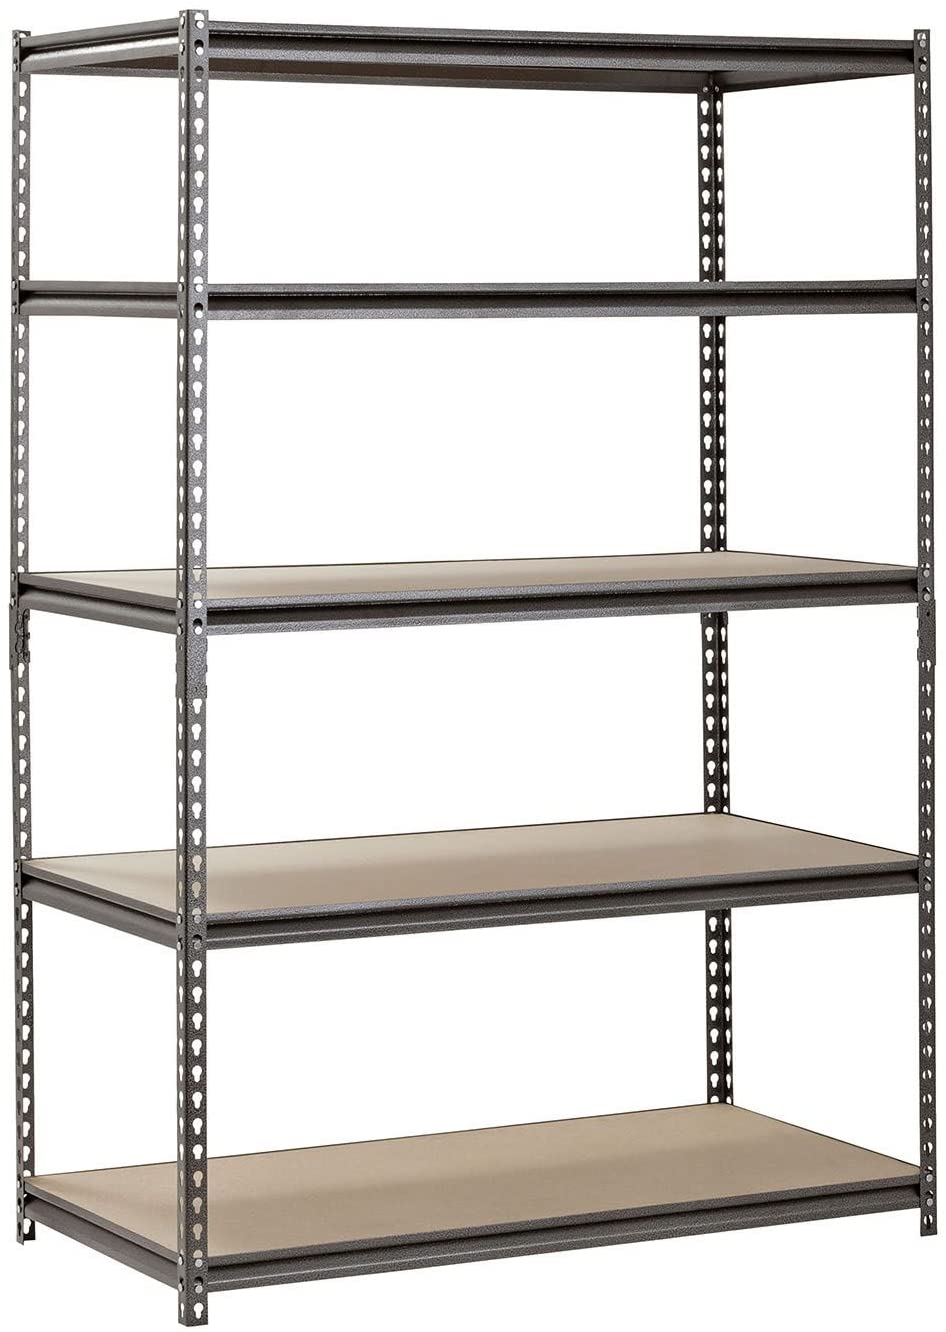 Heavy Duty Garage Shelf Steel Metal Storage 5 Level Adjustable Shelves Unit 72 H x 48 W x 24 Deep Pack of 2